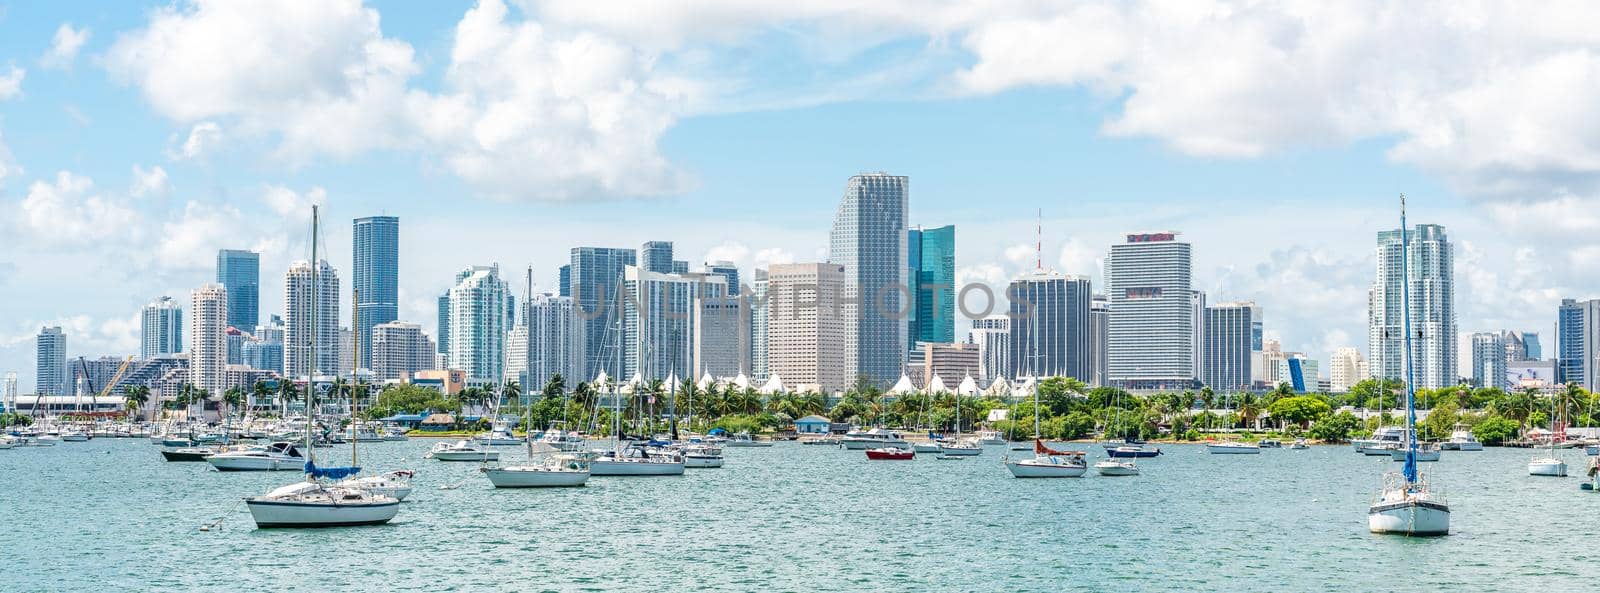 Miami, USA - September 11, 2019: Sailboats in Biscayne Bay with Miami Skyline by Mariakray